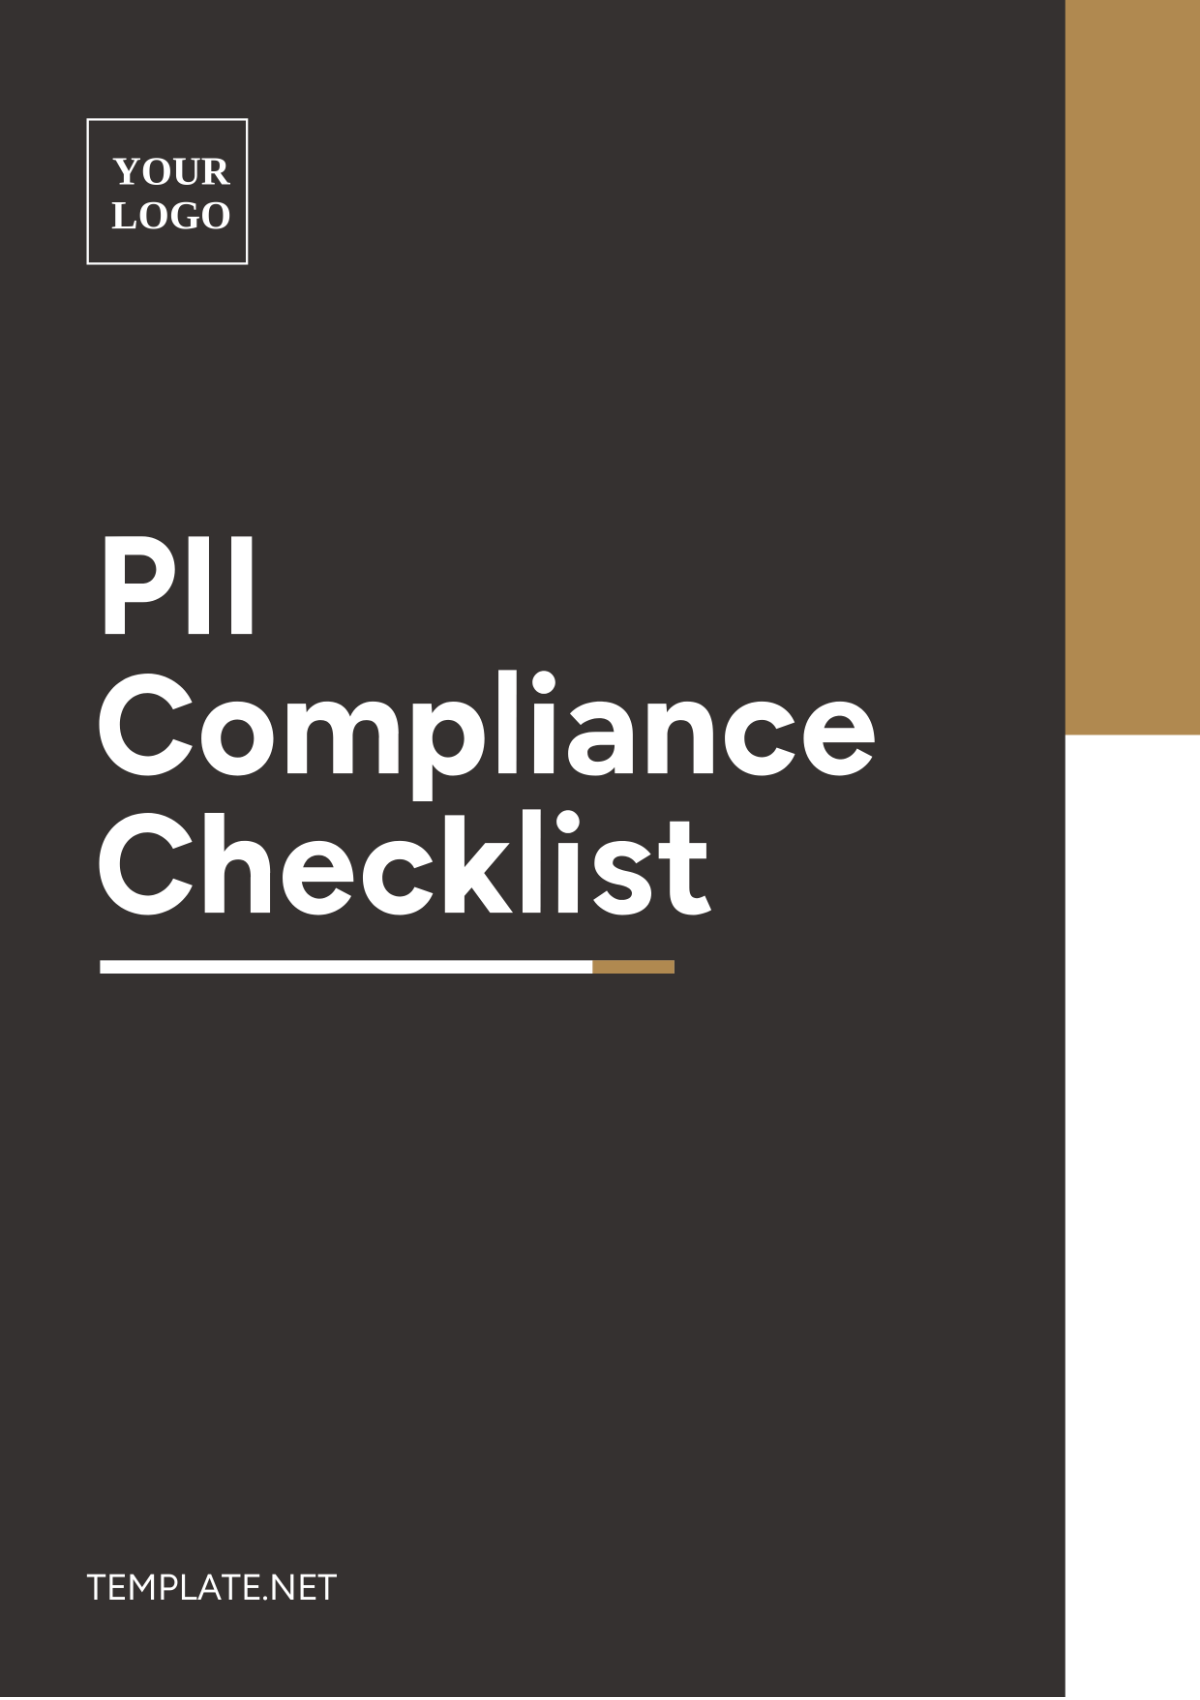 Free PII Compliance Checklist Template